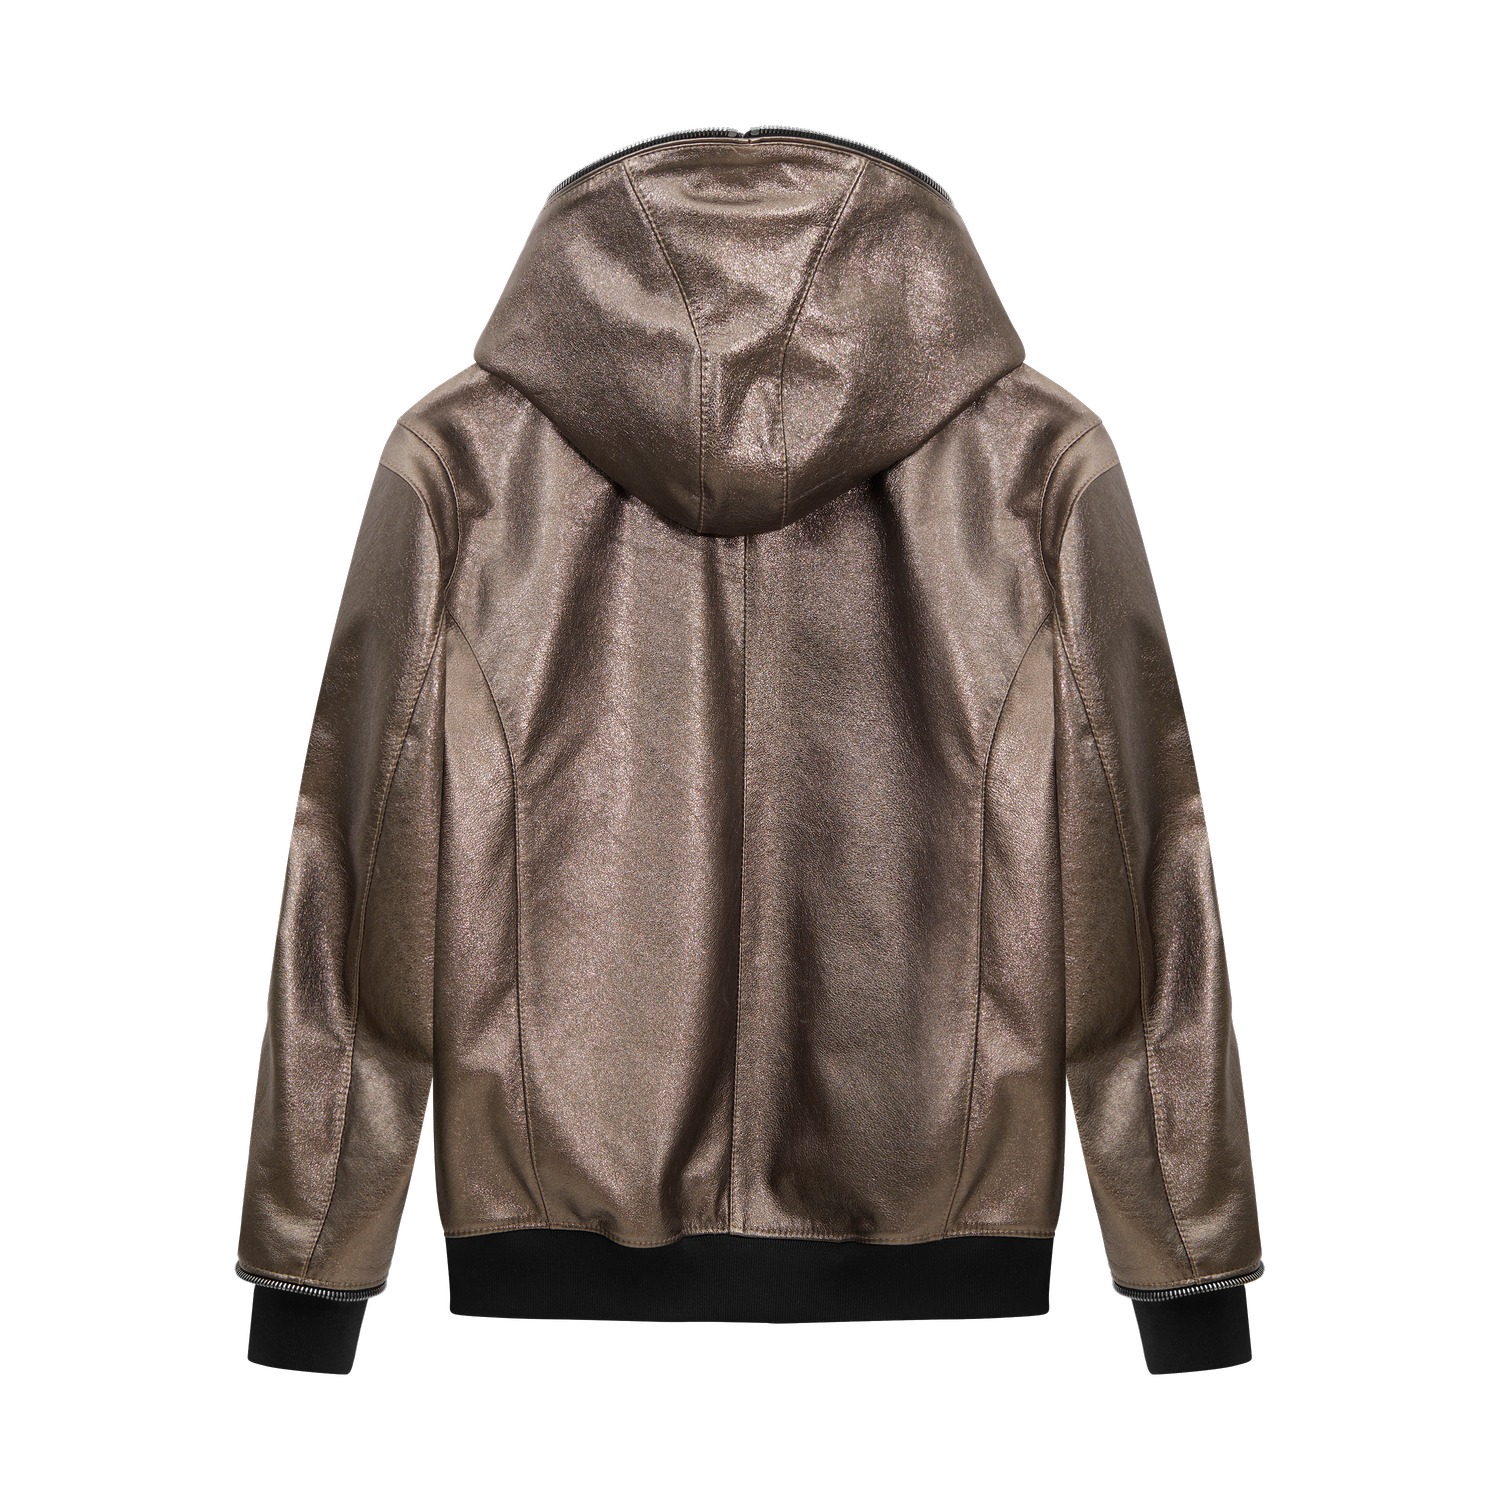 Berlin Leather Jacket by Martin Key